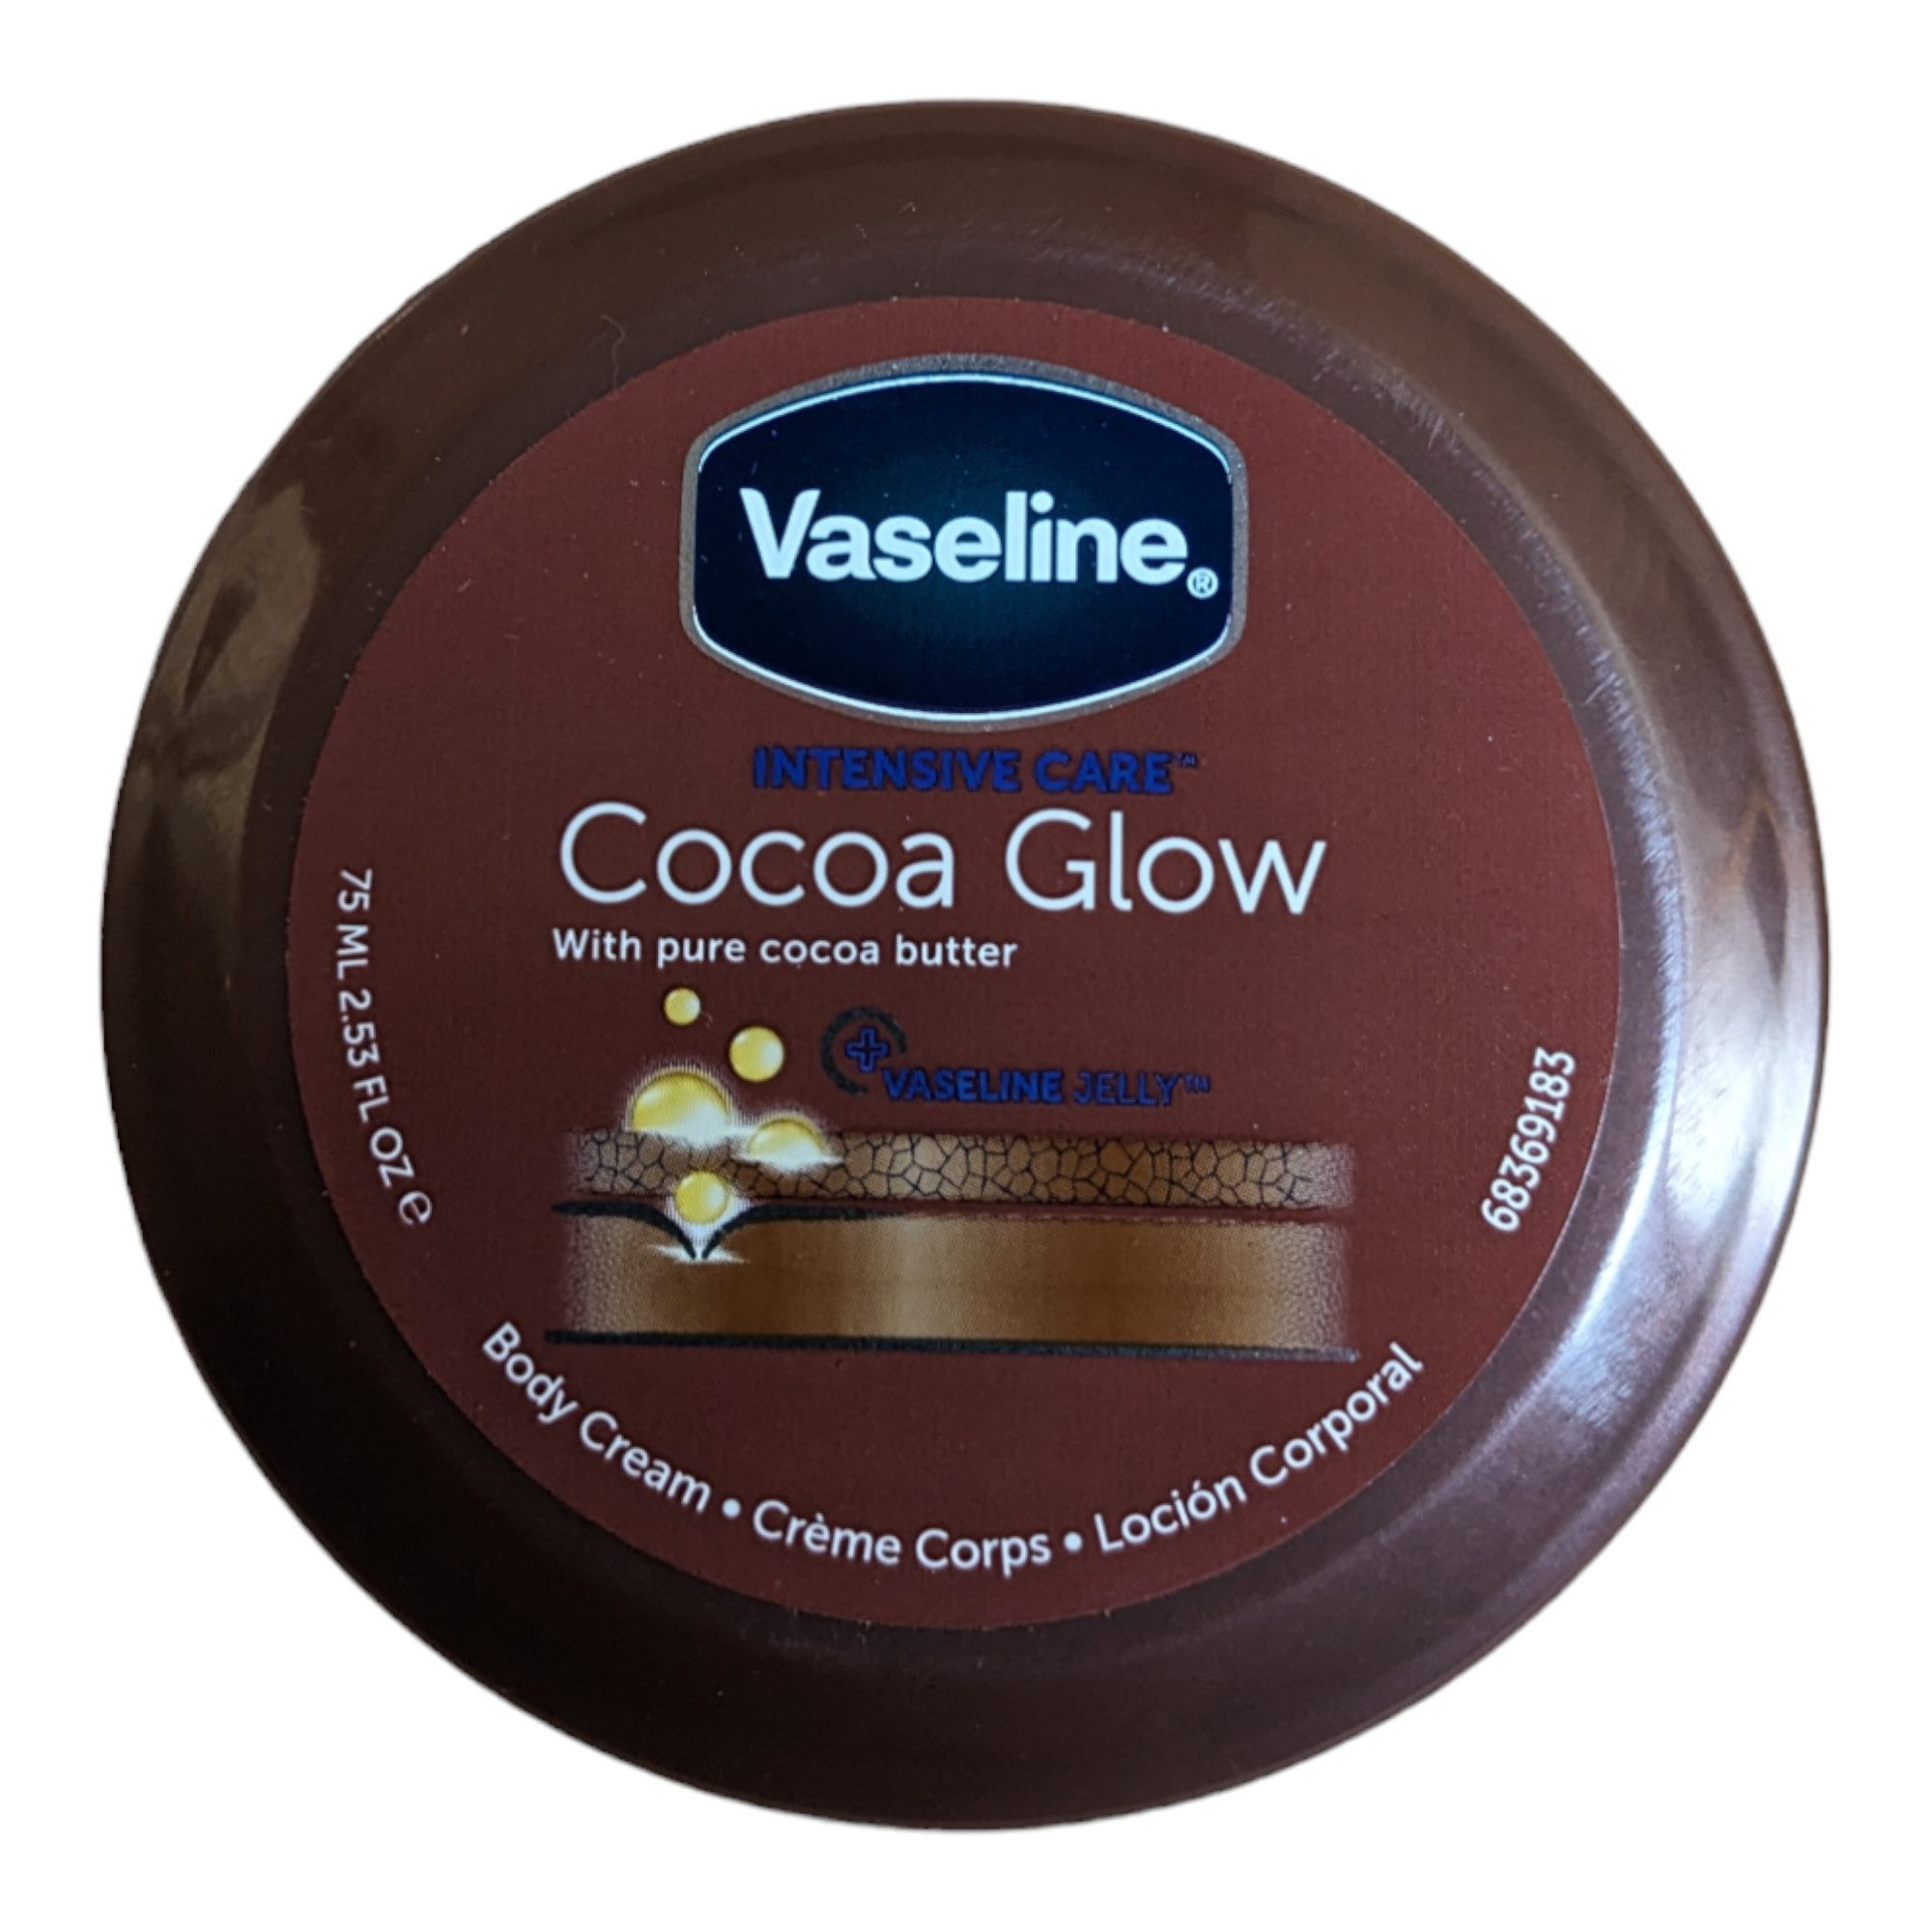 Vaseline Bodylotion Intensive Care Cocoa Glow 3 x75ml, 3x75ml